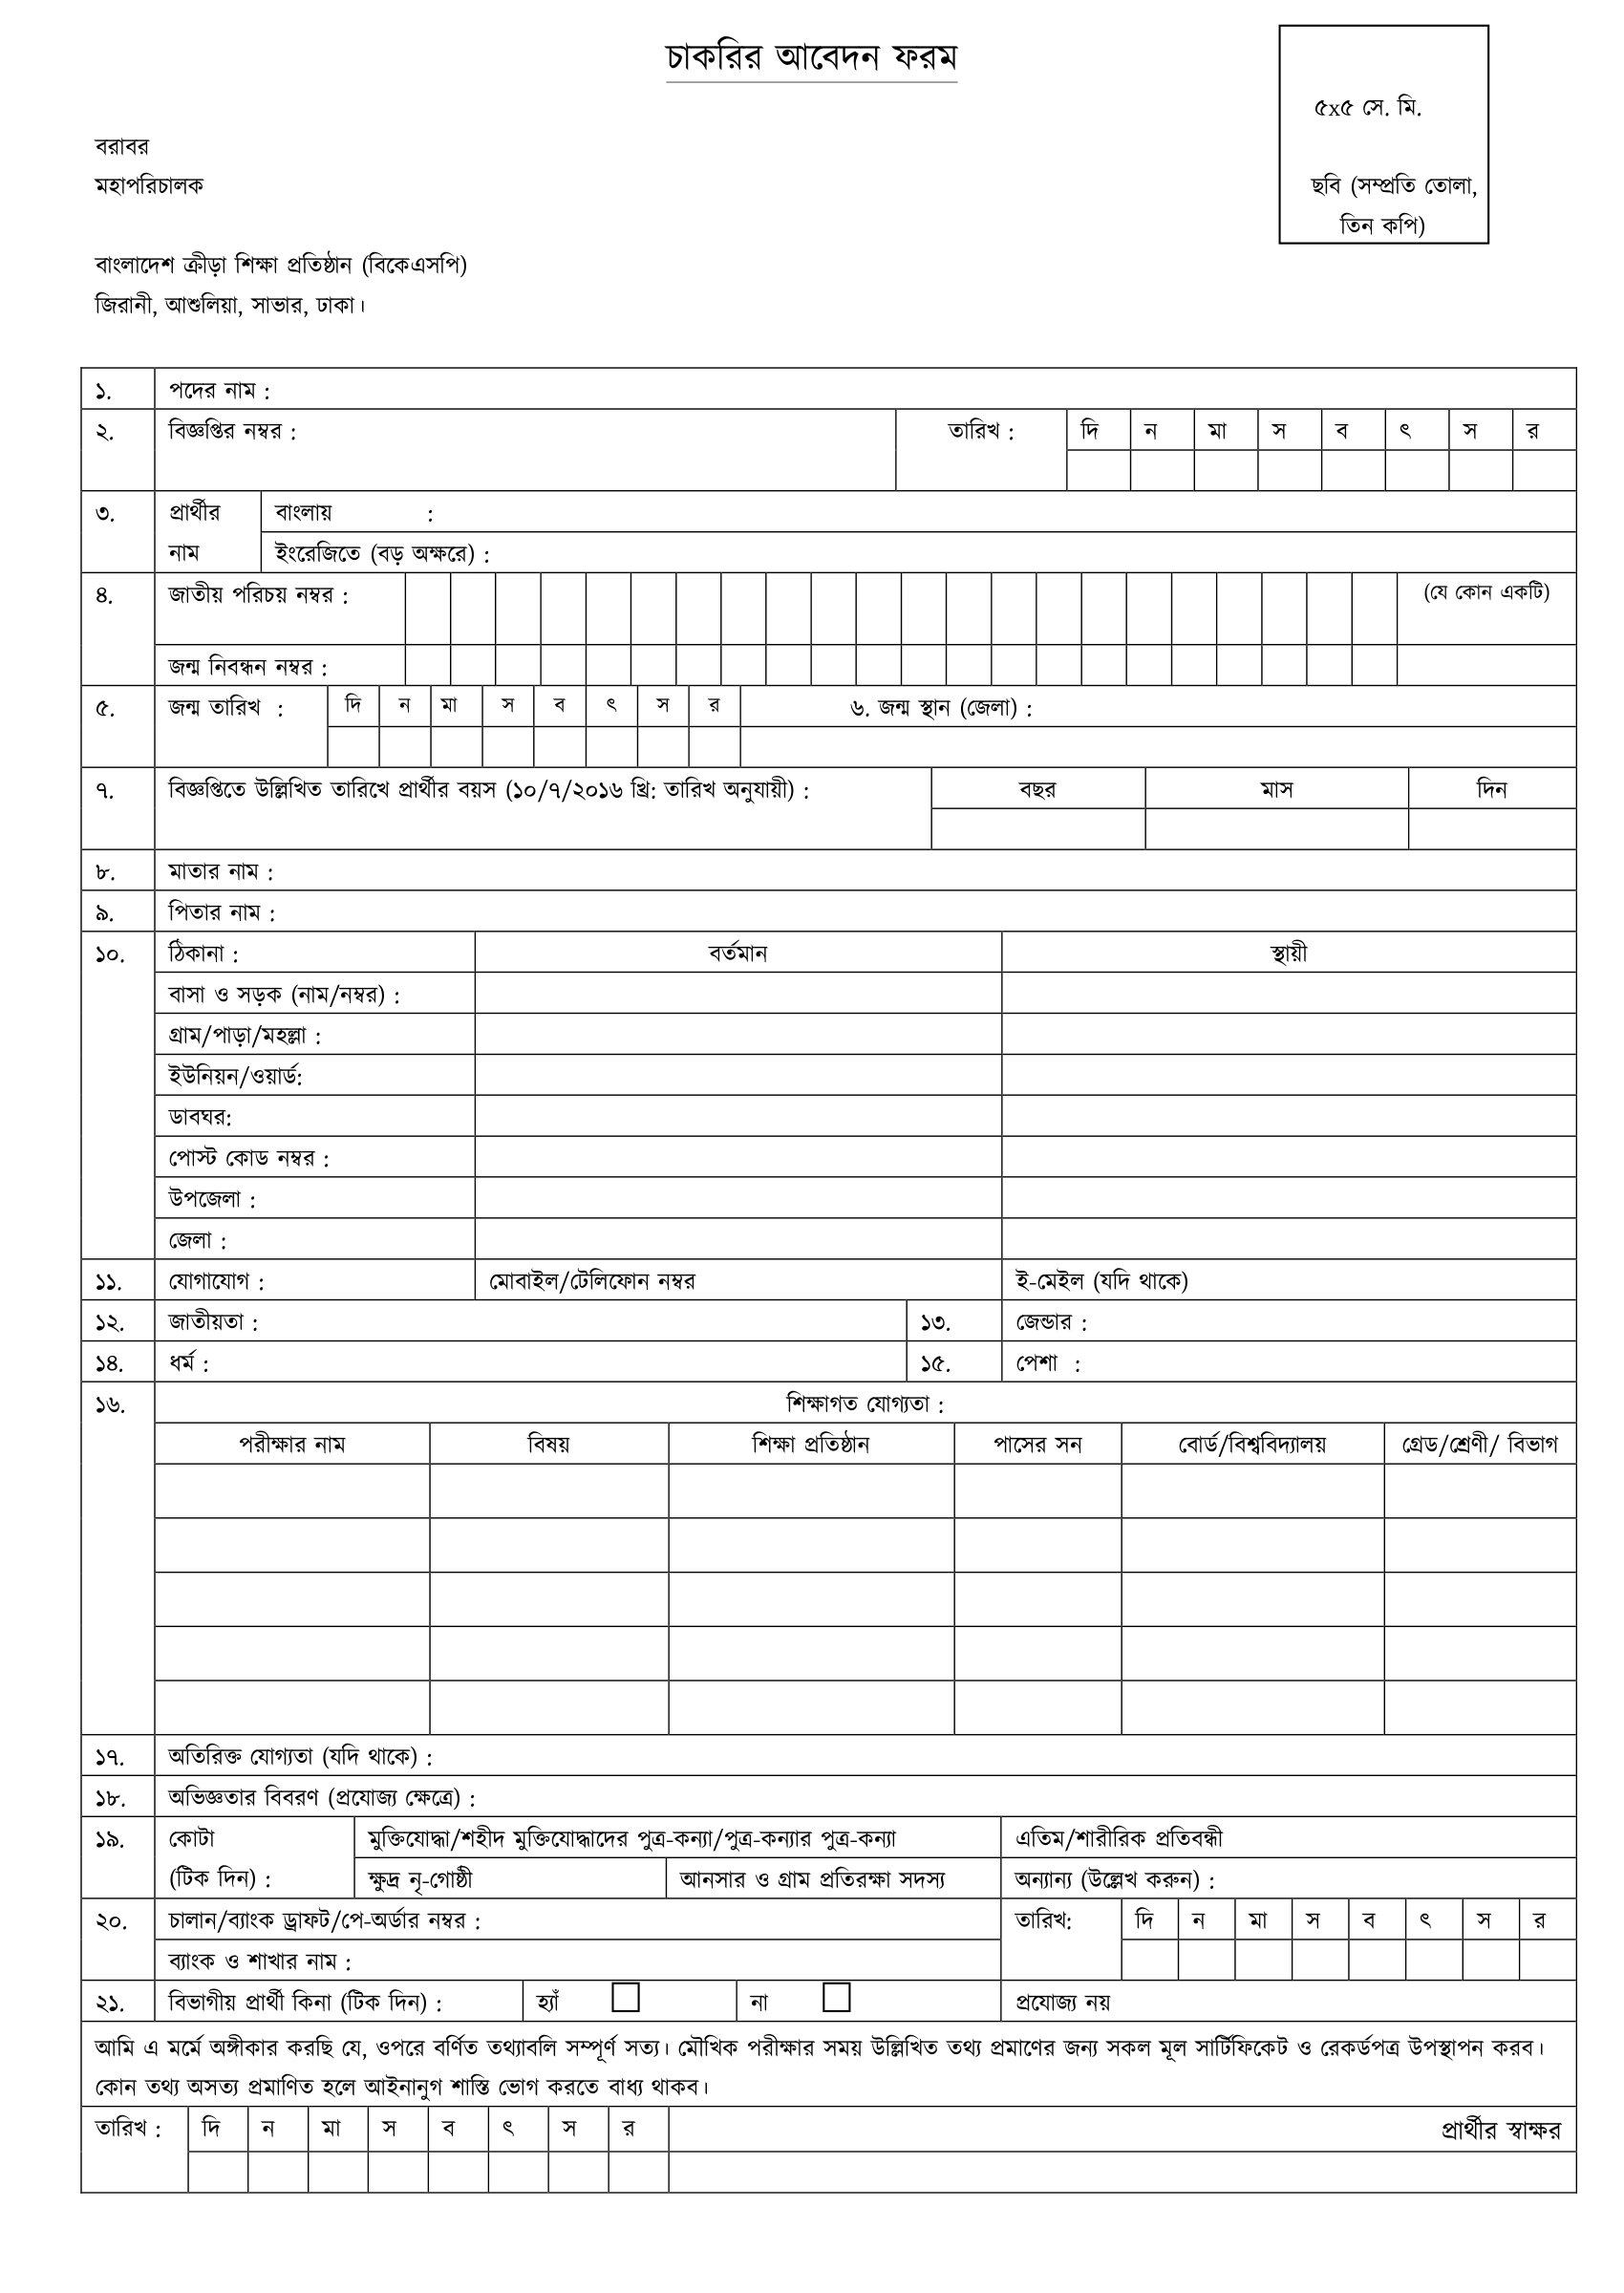 Application Form of BKSP job circular 2023.